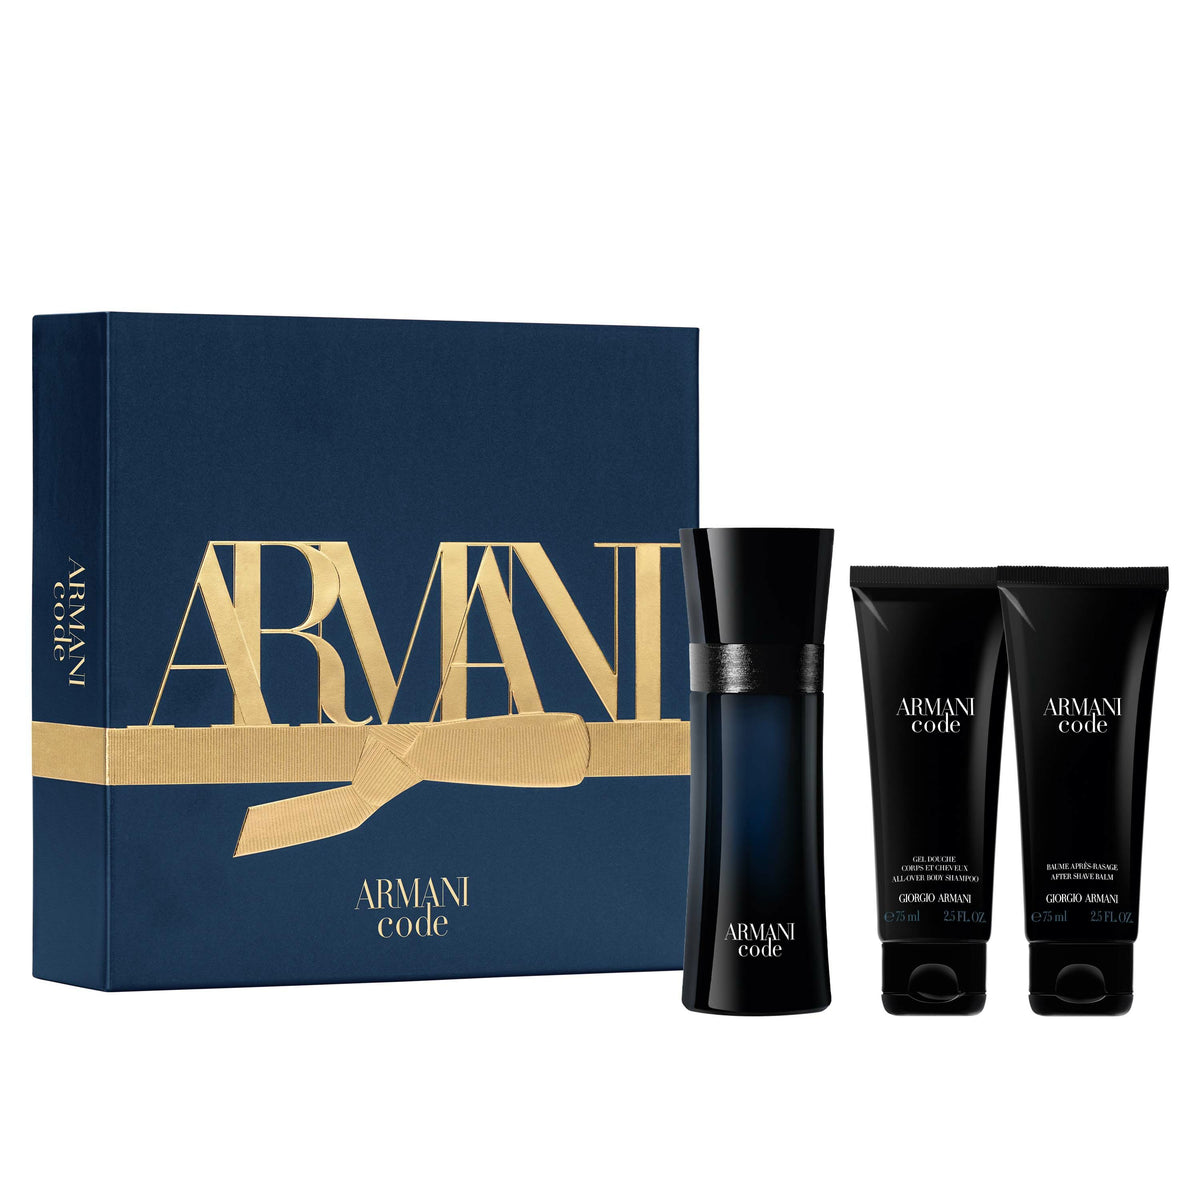 Armani Code Gift Set - Perfume Shop